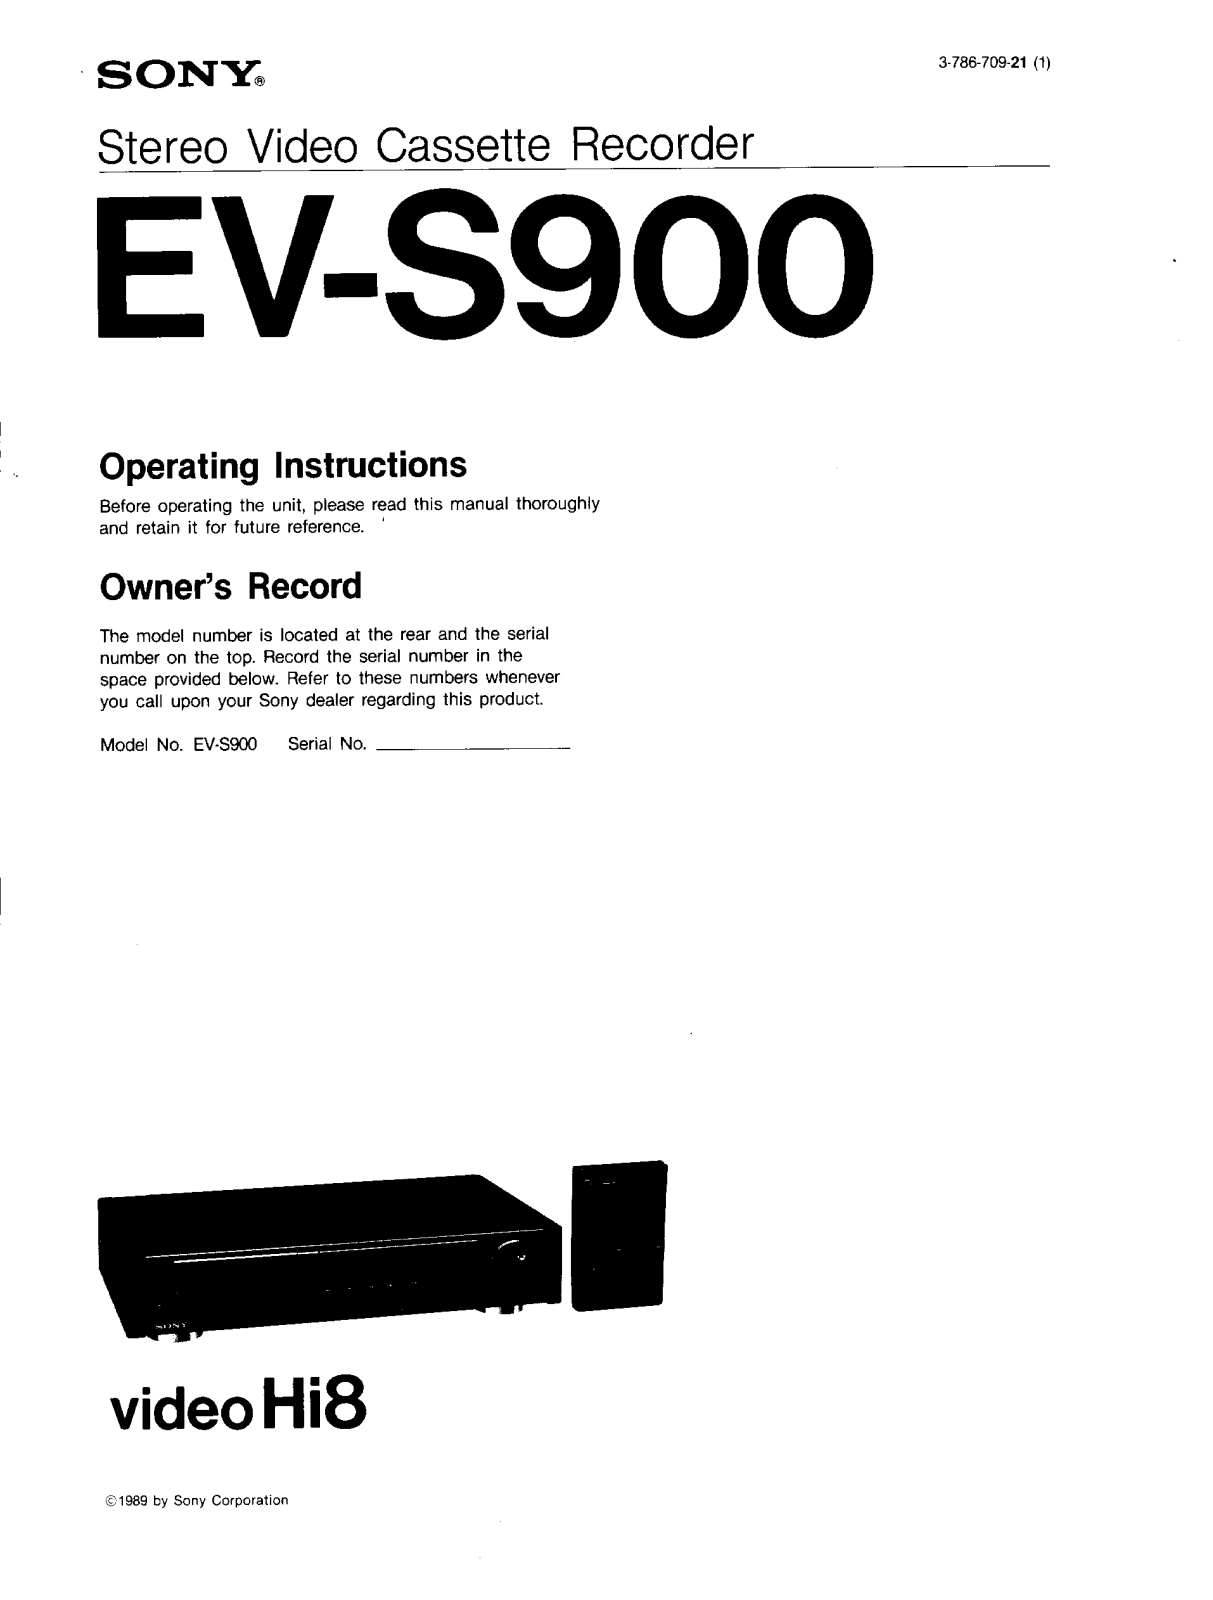 Sony EVS900 Operating Manual